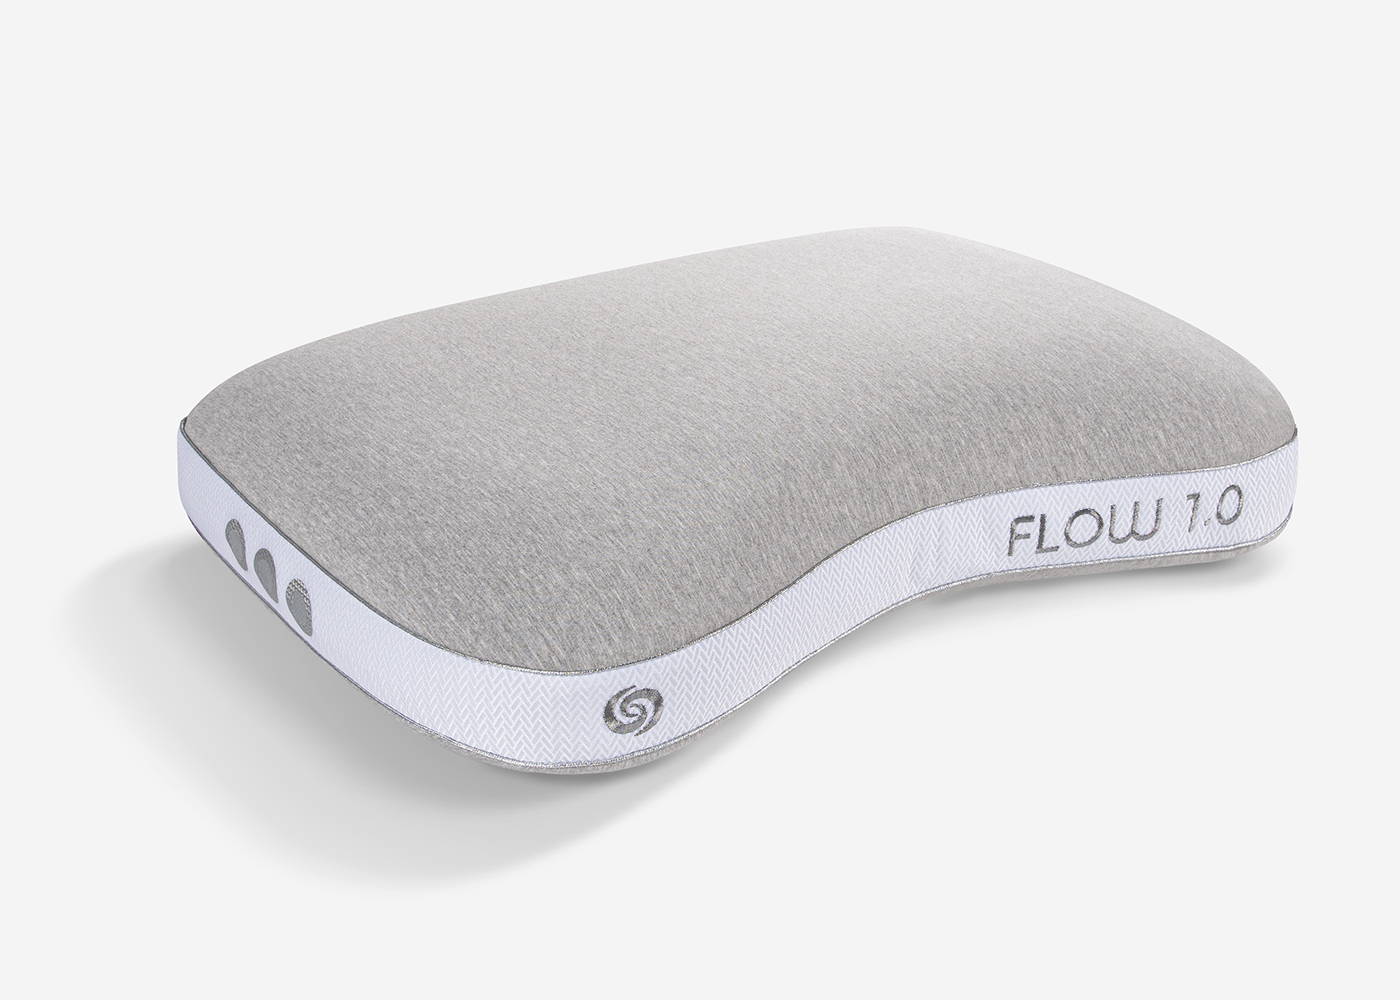 A silo image of a Bedgear Flow Cuddle Pillow